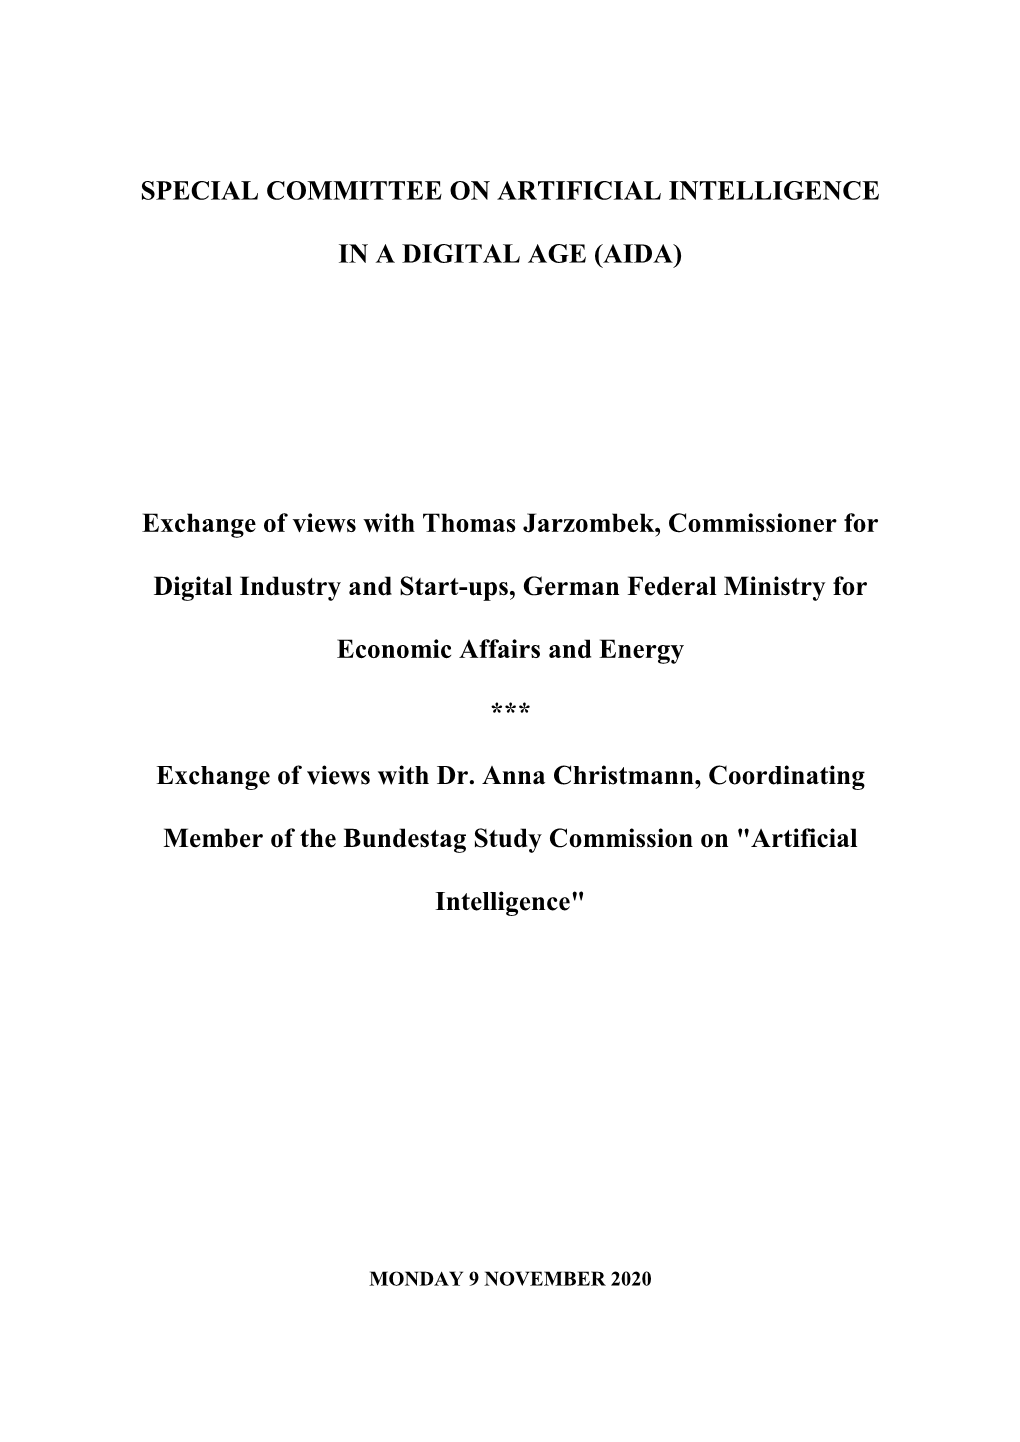 AIDA Meeting of 9 November 2020 (PDF